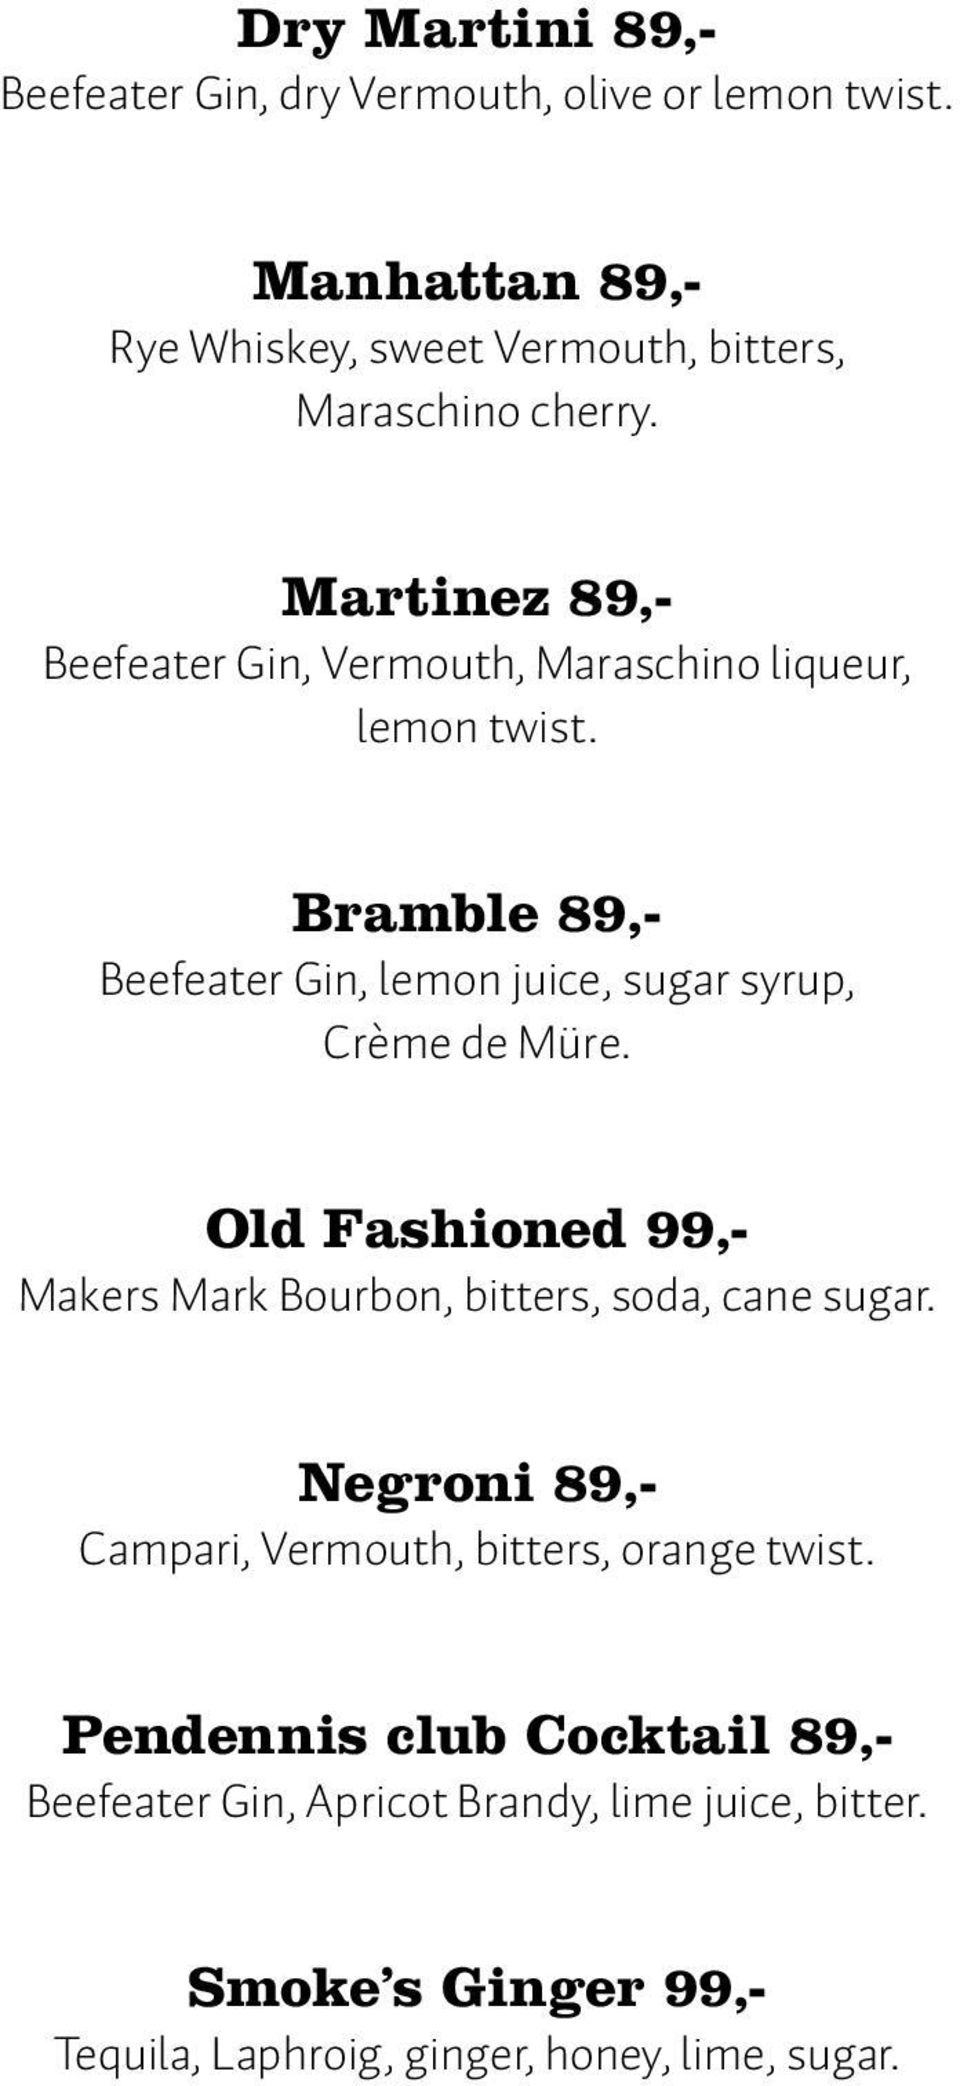 Martinez 89,- Beefeater Gin, Vermouth, Maraschino liqueur, lemon twist.